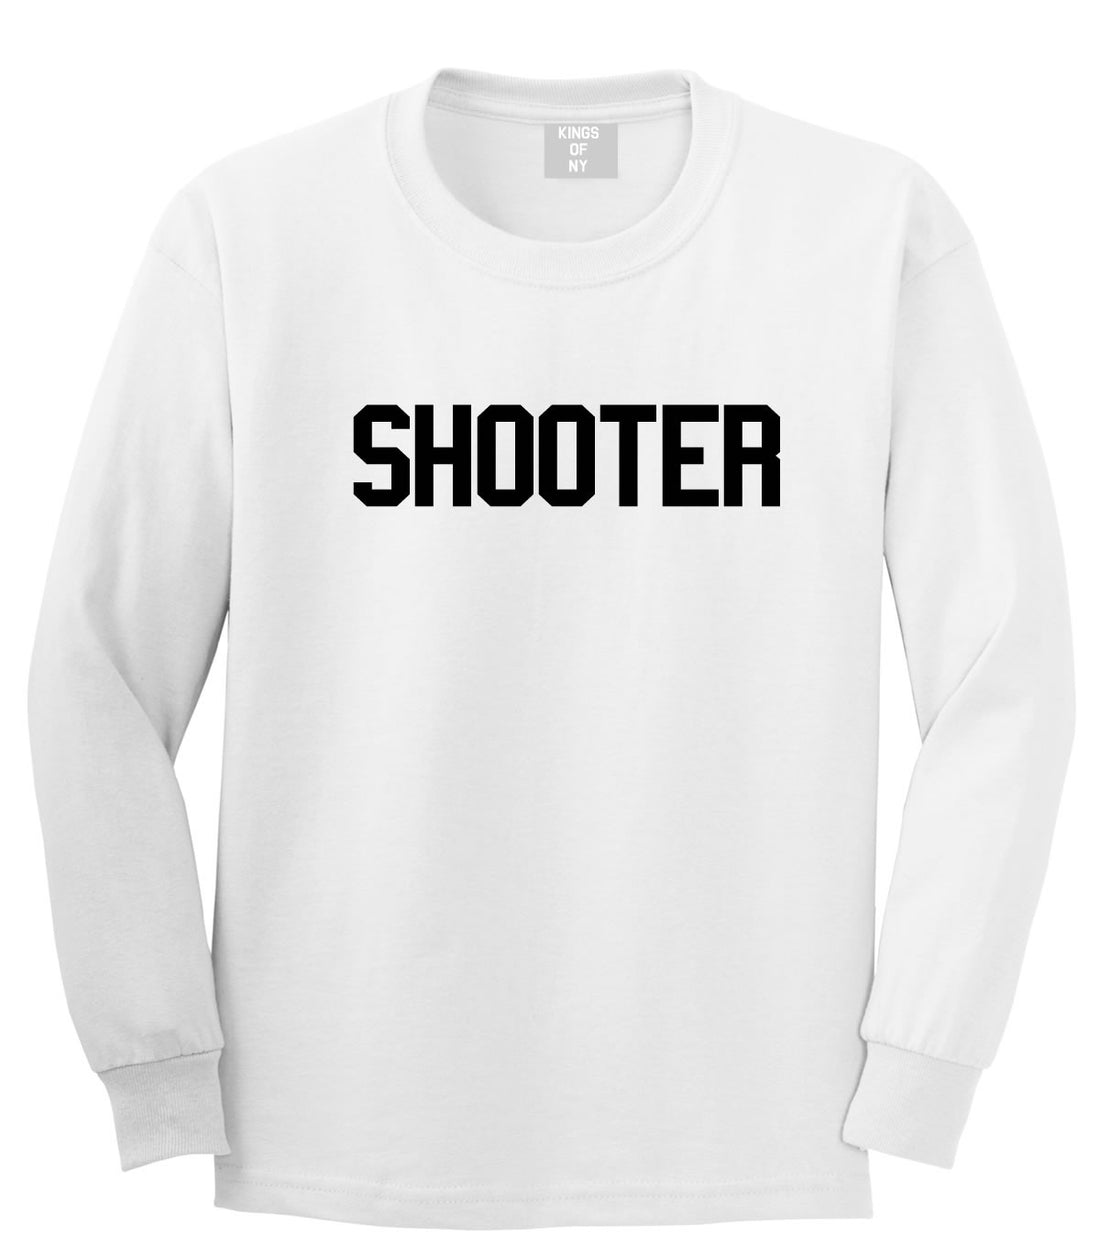 Shooter Long Sleeve T-Shirt by Kings Of NY